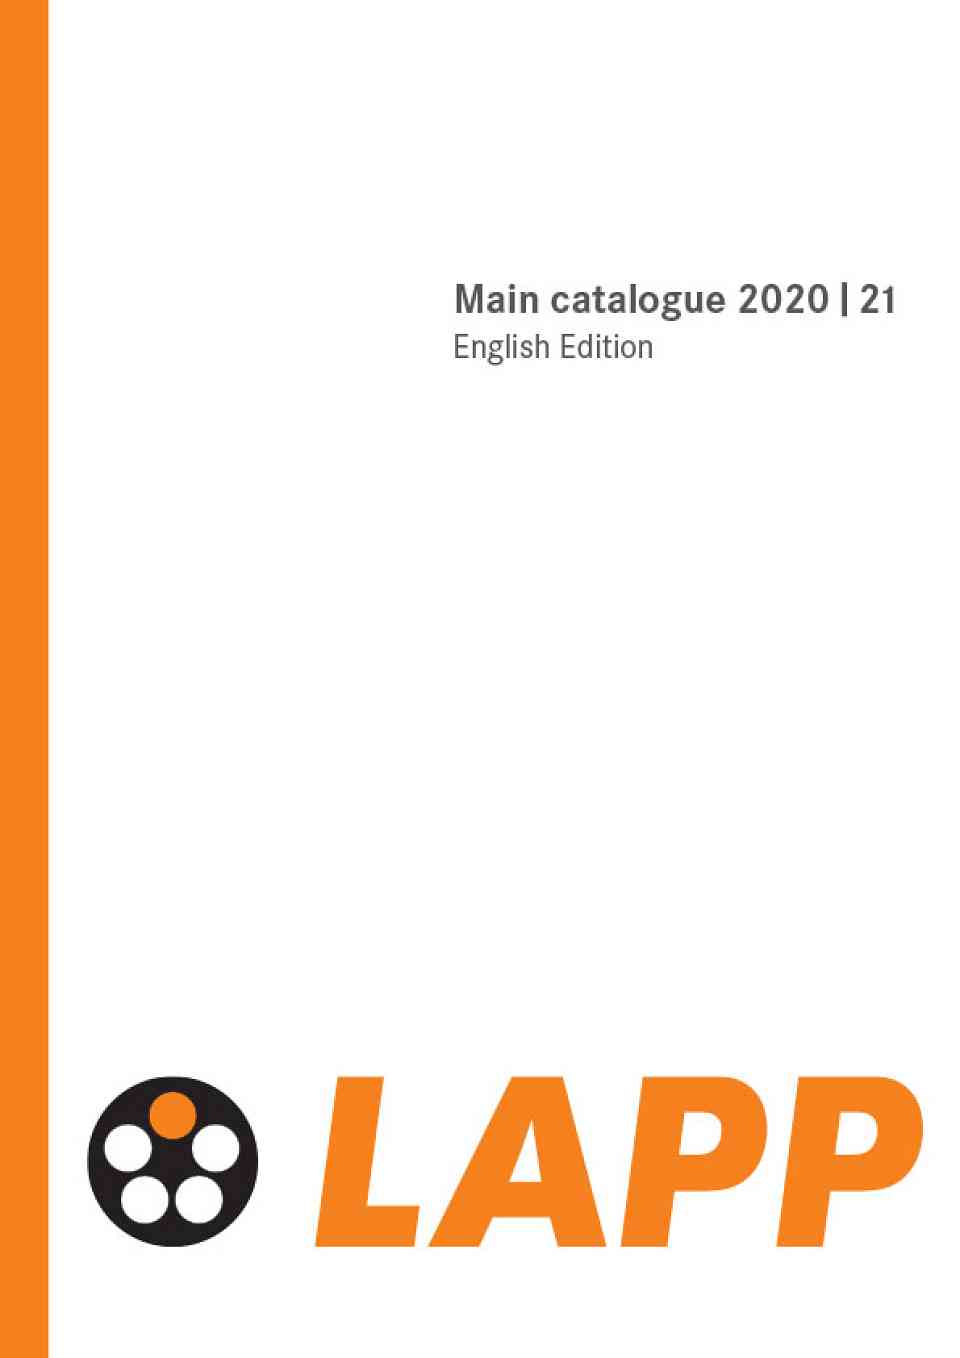 Main Catalogue Catalogue Cover